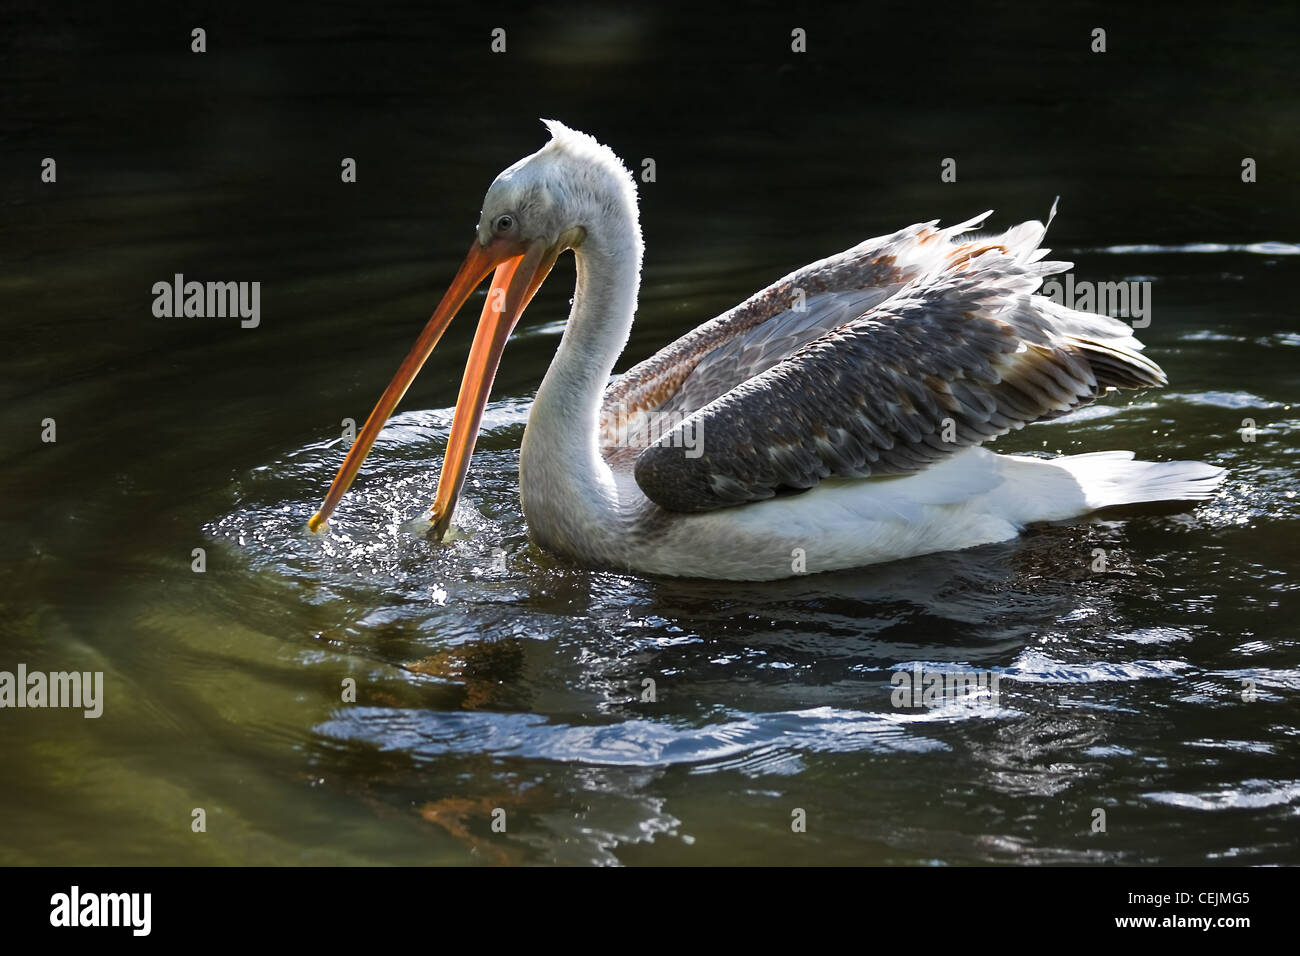 Pelican swimming and fishing with open beak in sunshine Stock Photo